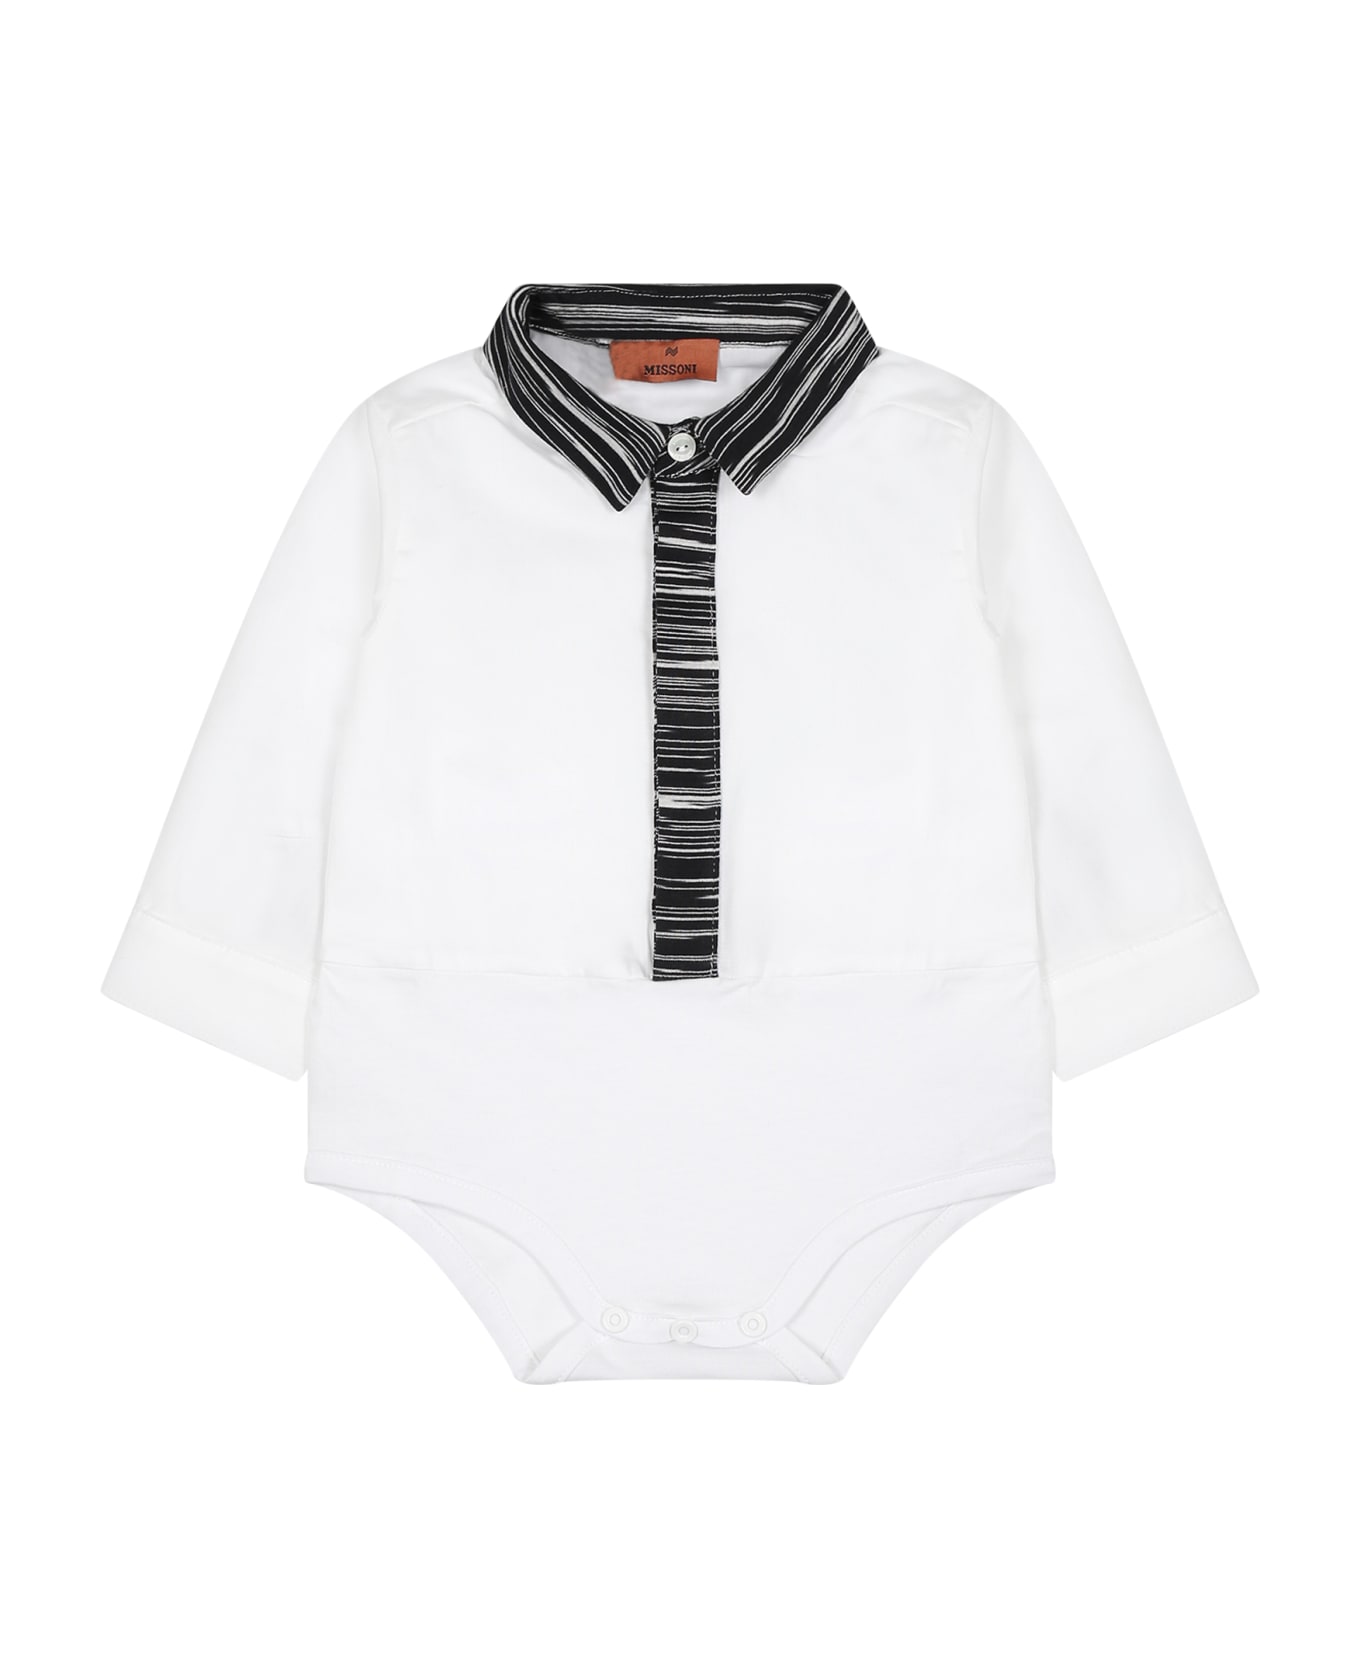 Missoni Kids White Shirt For Baby Boy - White